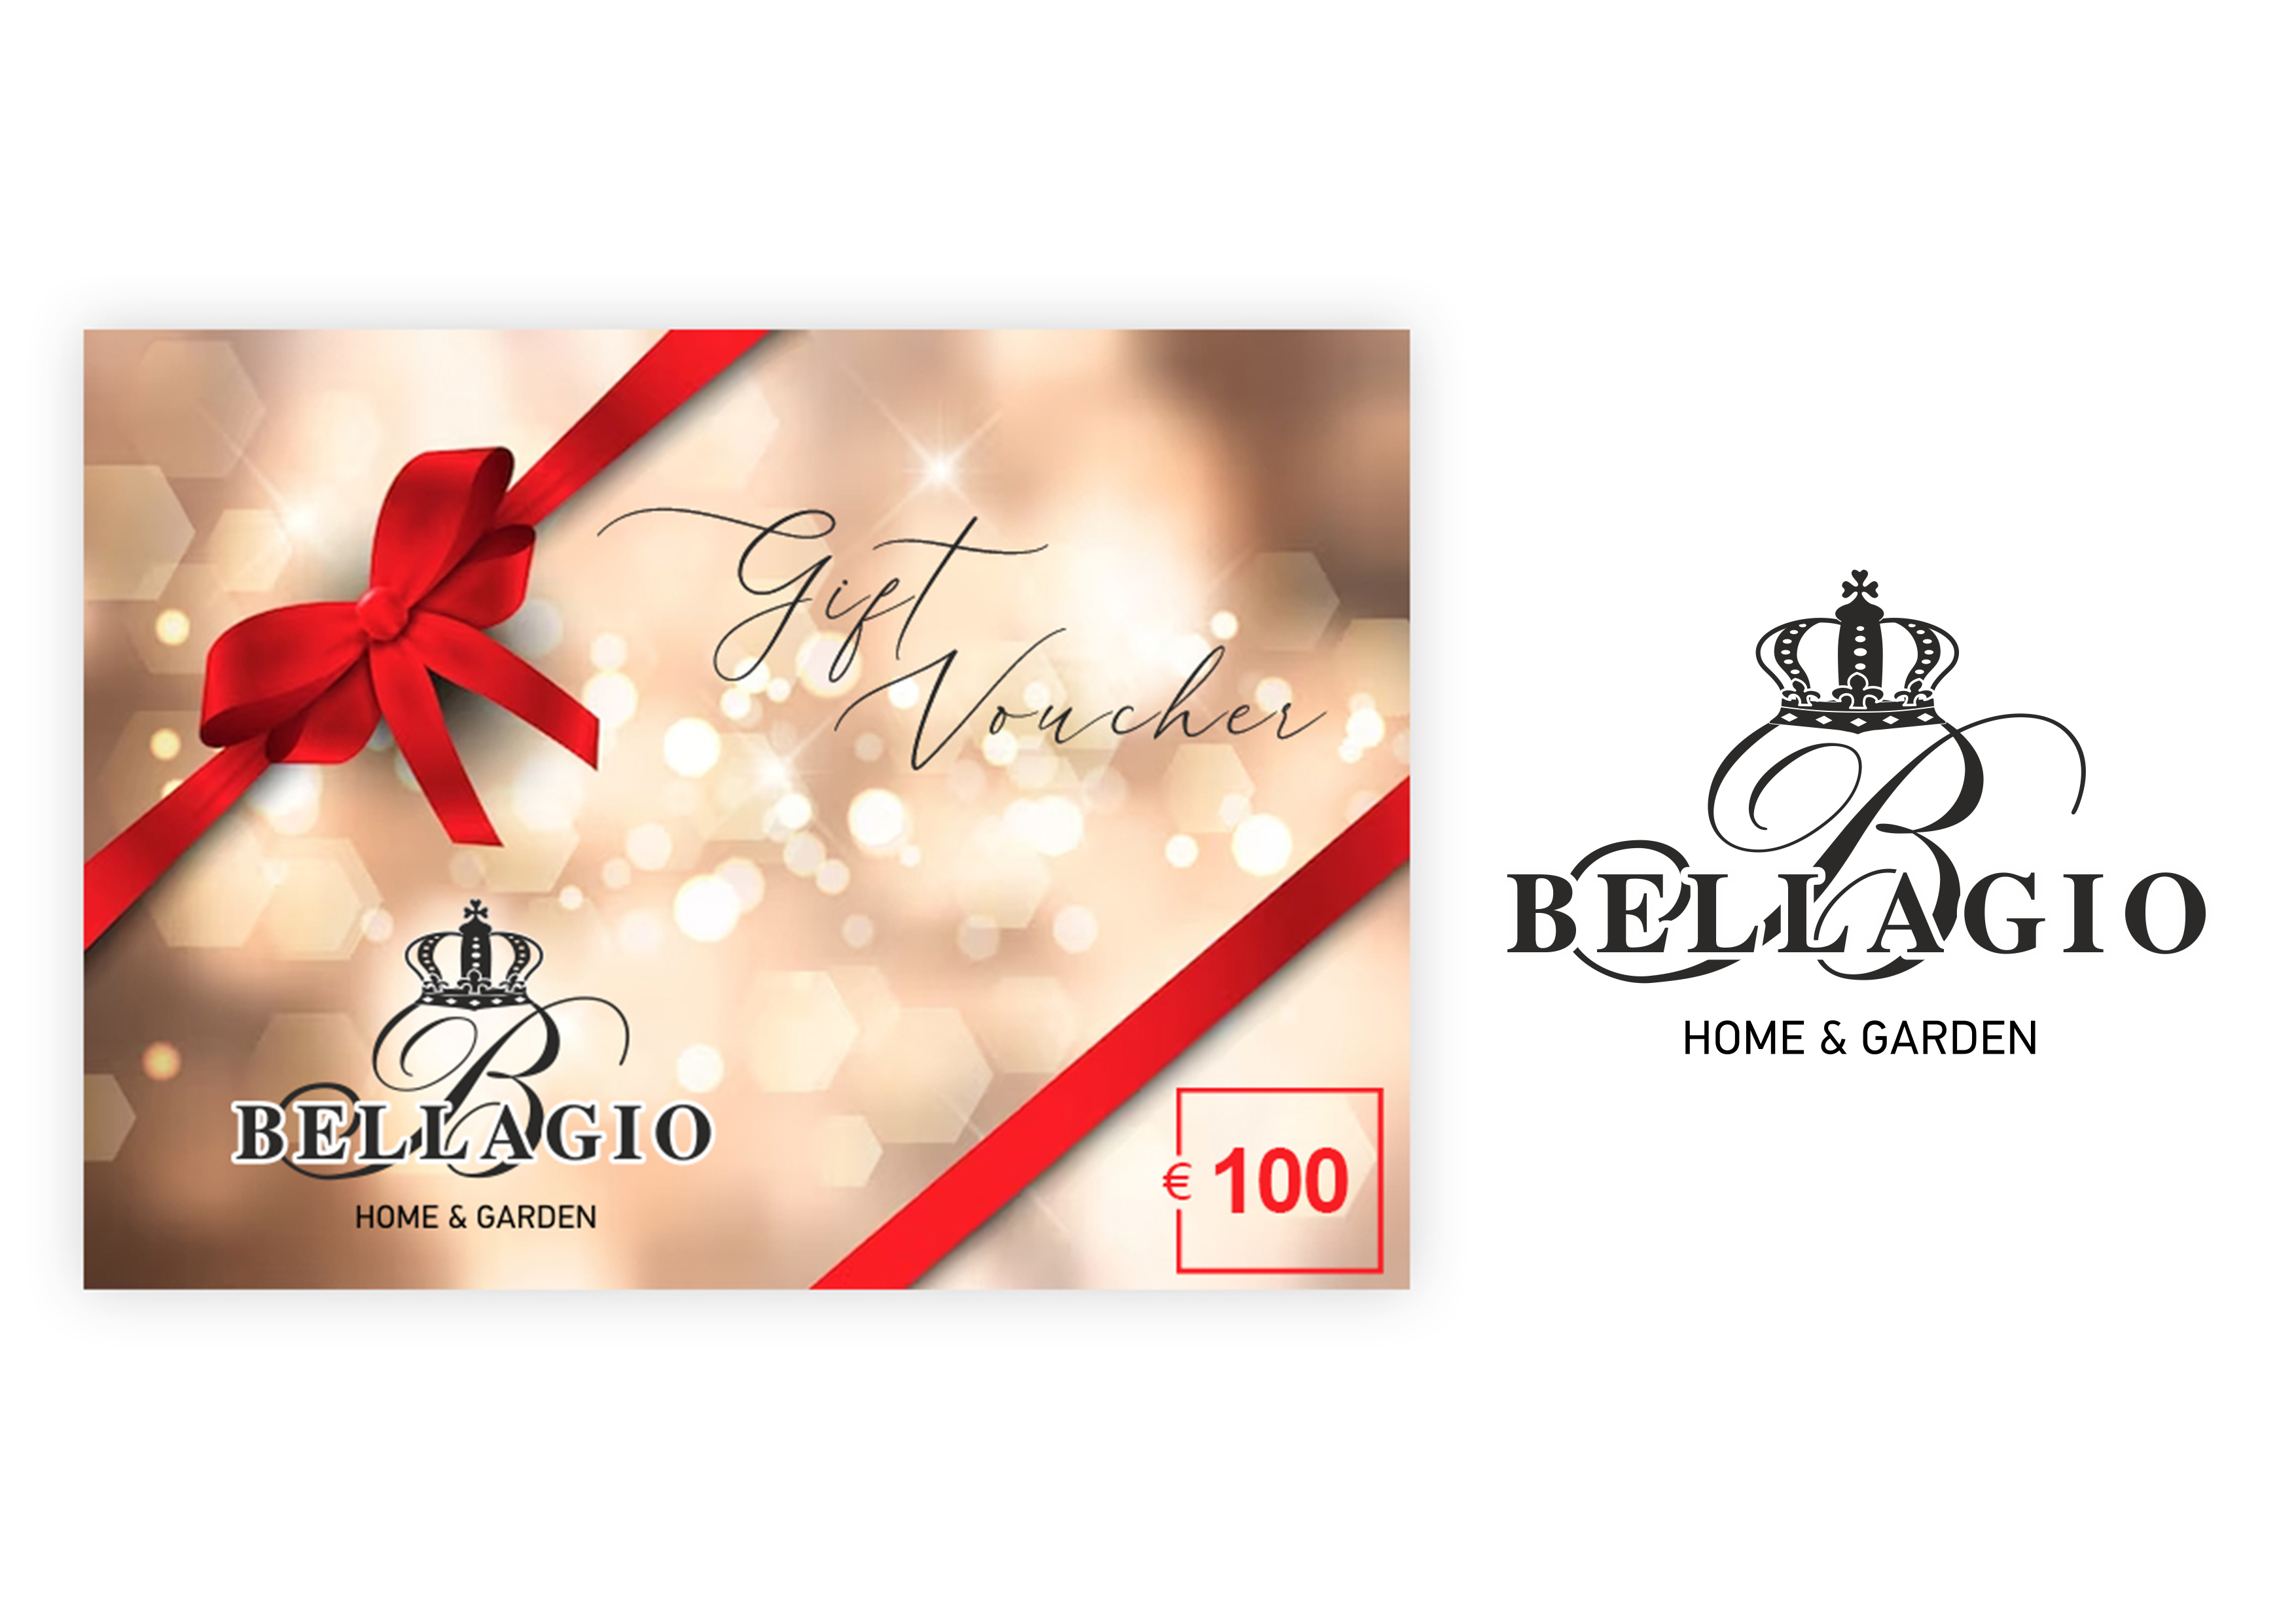 To HELLO! σε συνεργασία με το Bellagio Home & Garden κάνουν δώρο σε έναν τυχερό, voucher αξίας €100